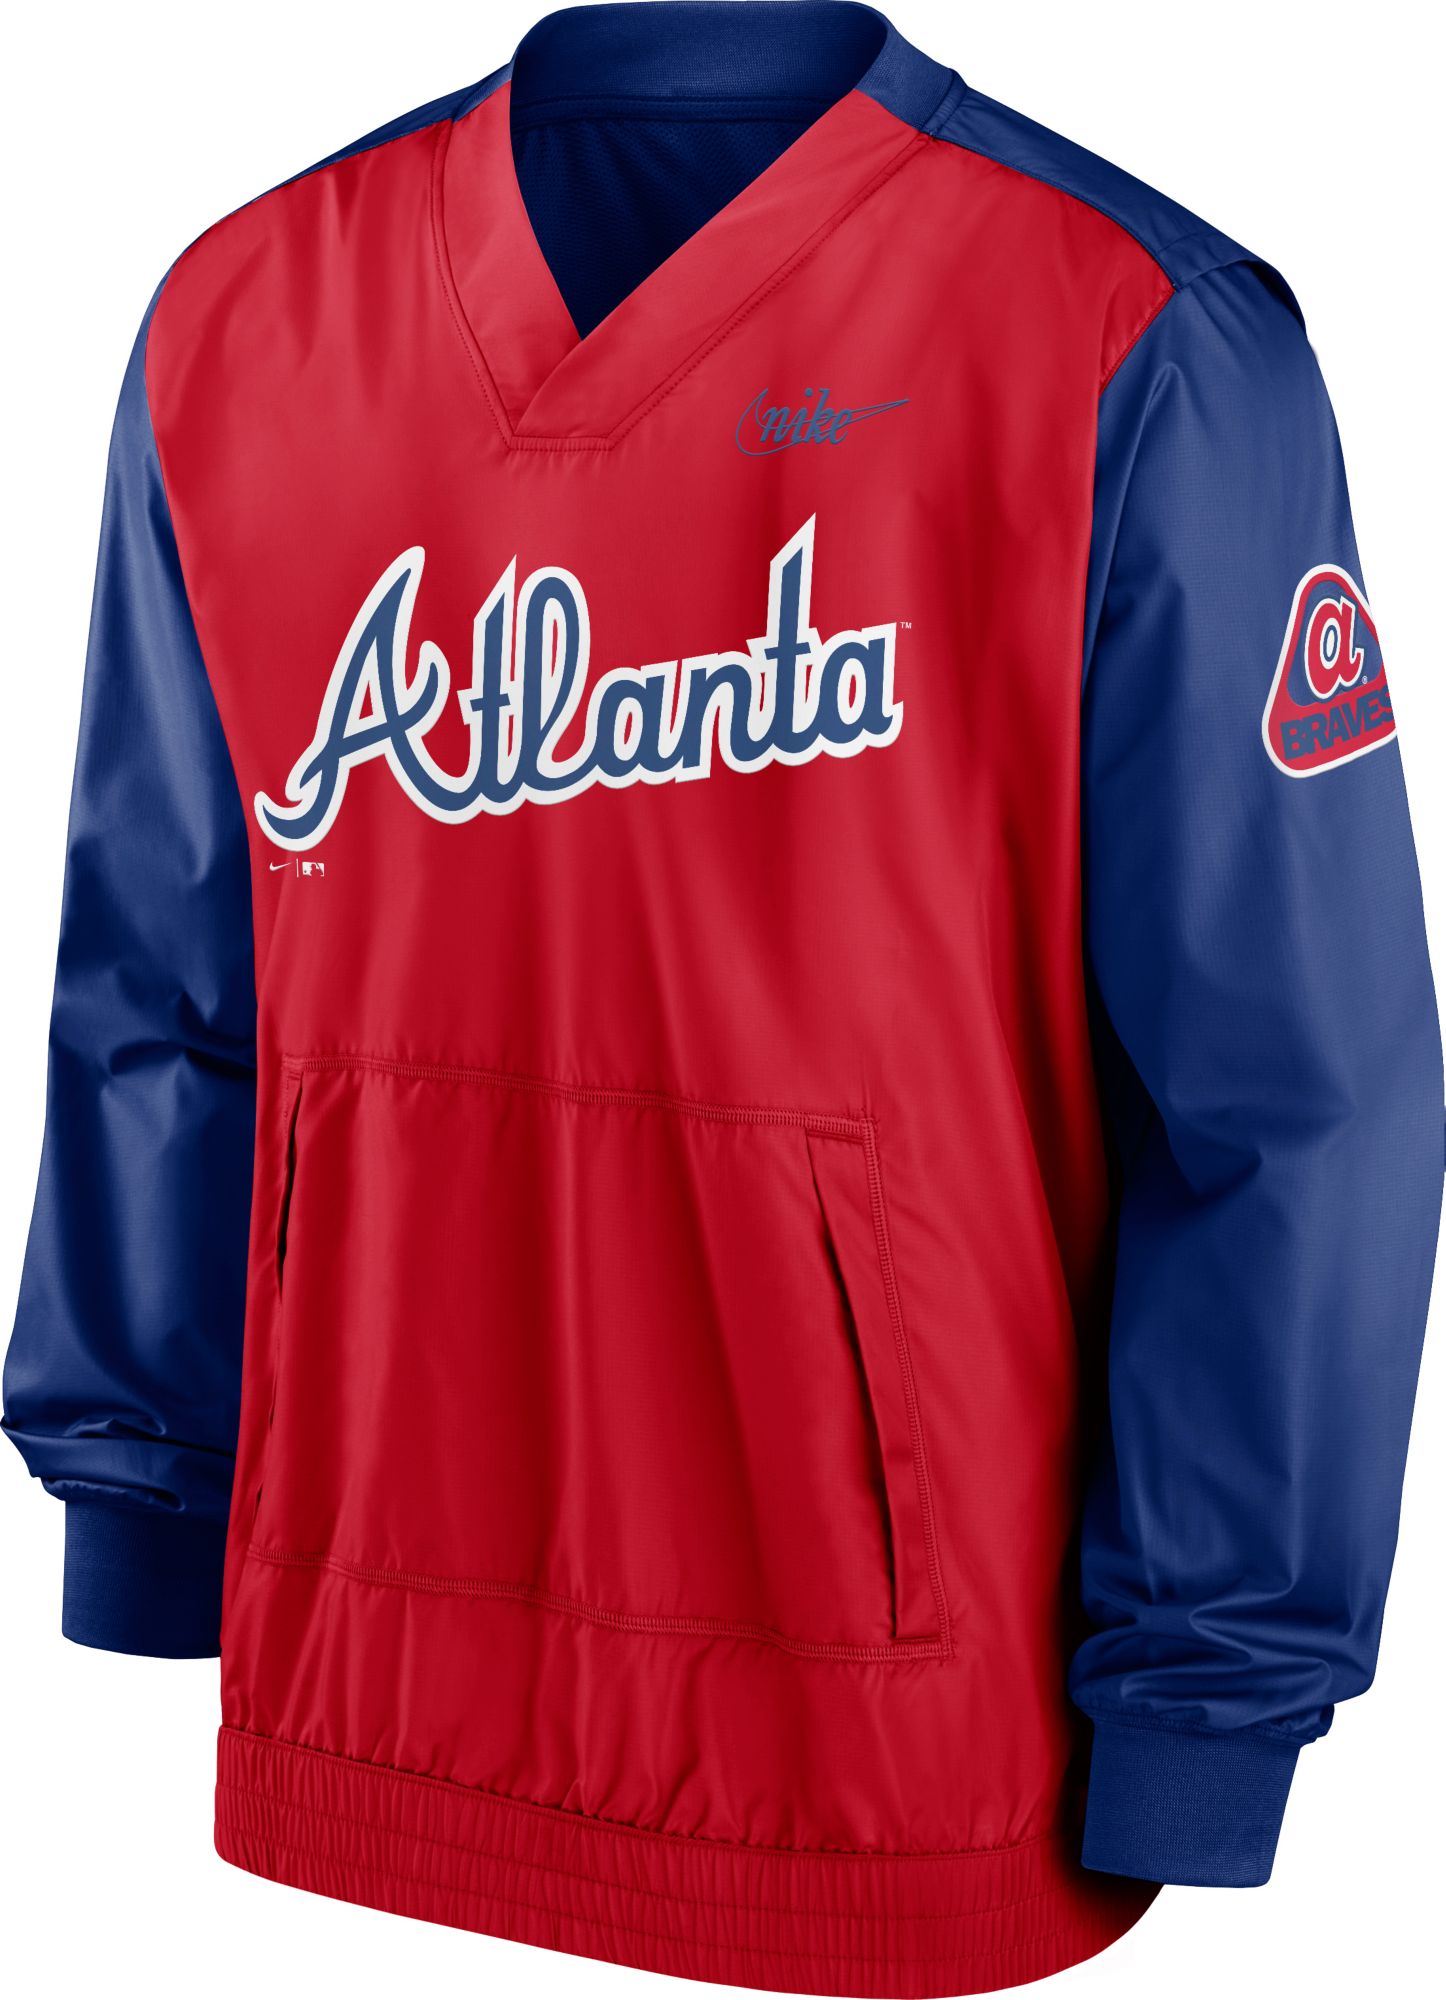 Atlanta Braves Nike Wordmark Legend Performance T-Shirt - Red